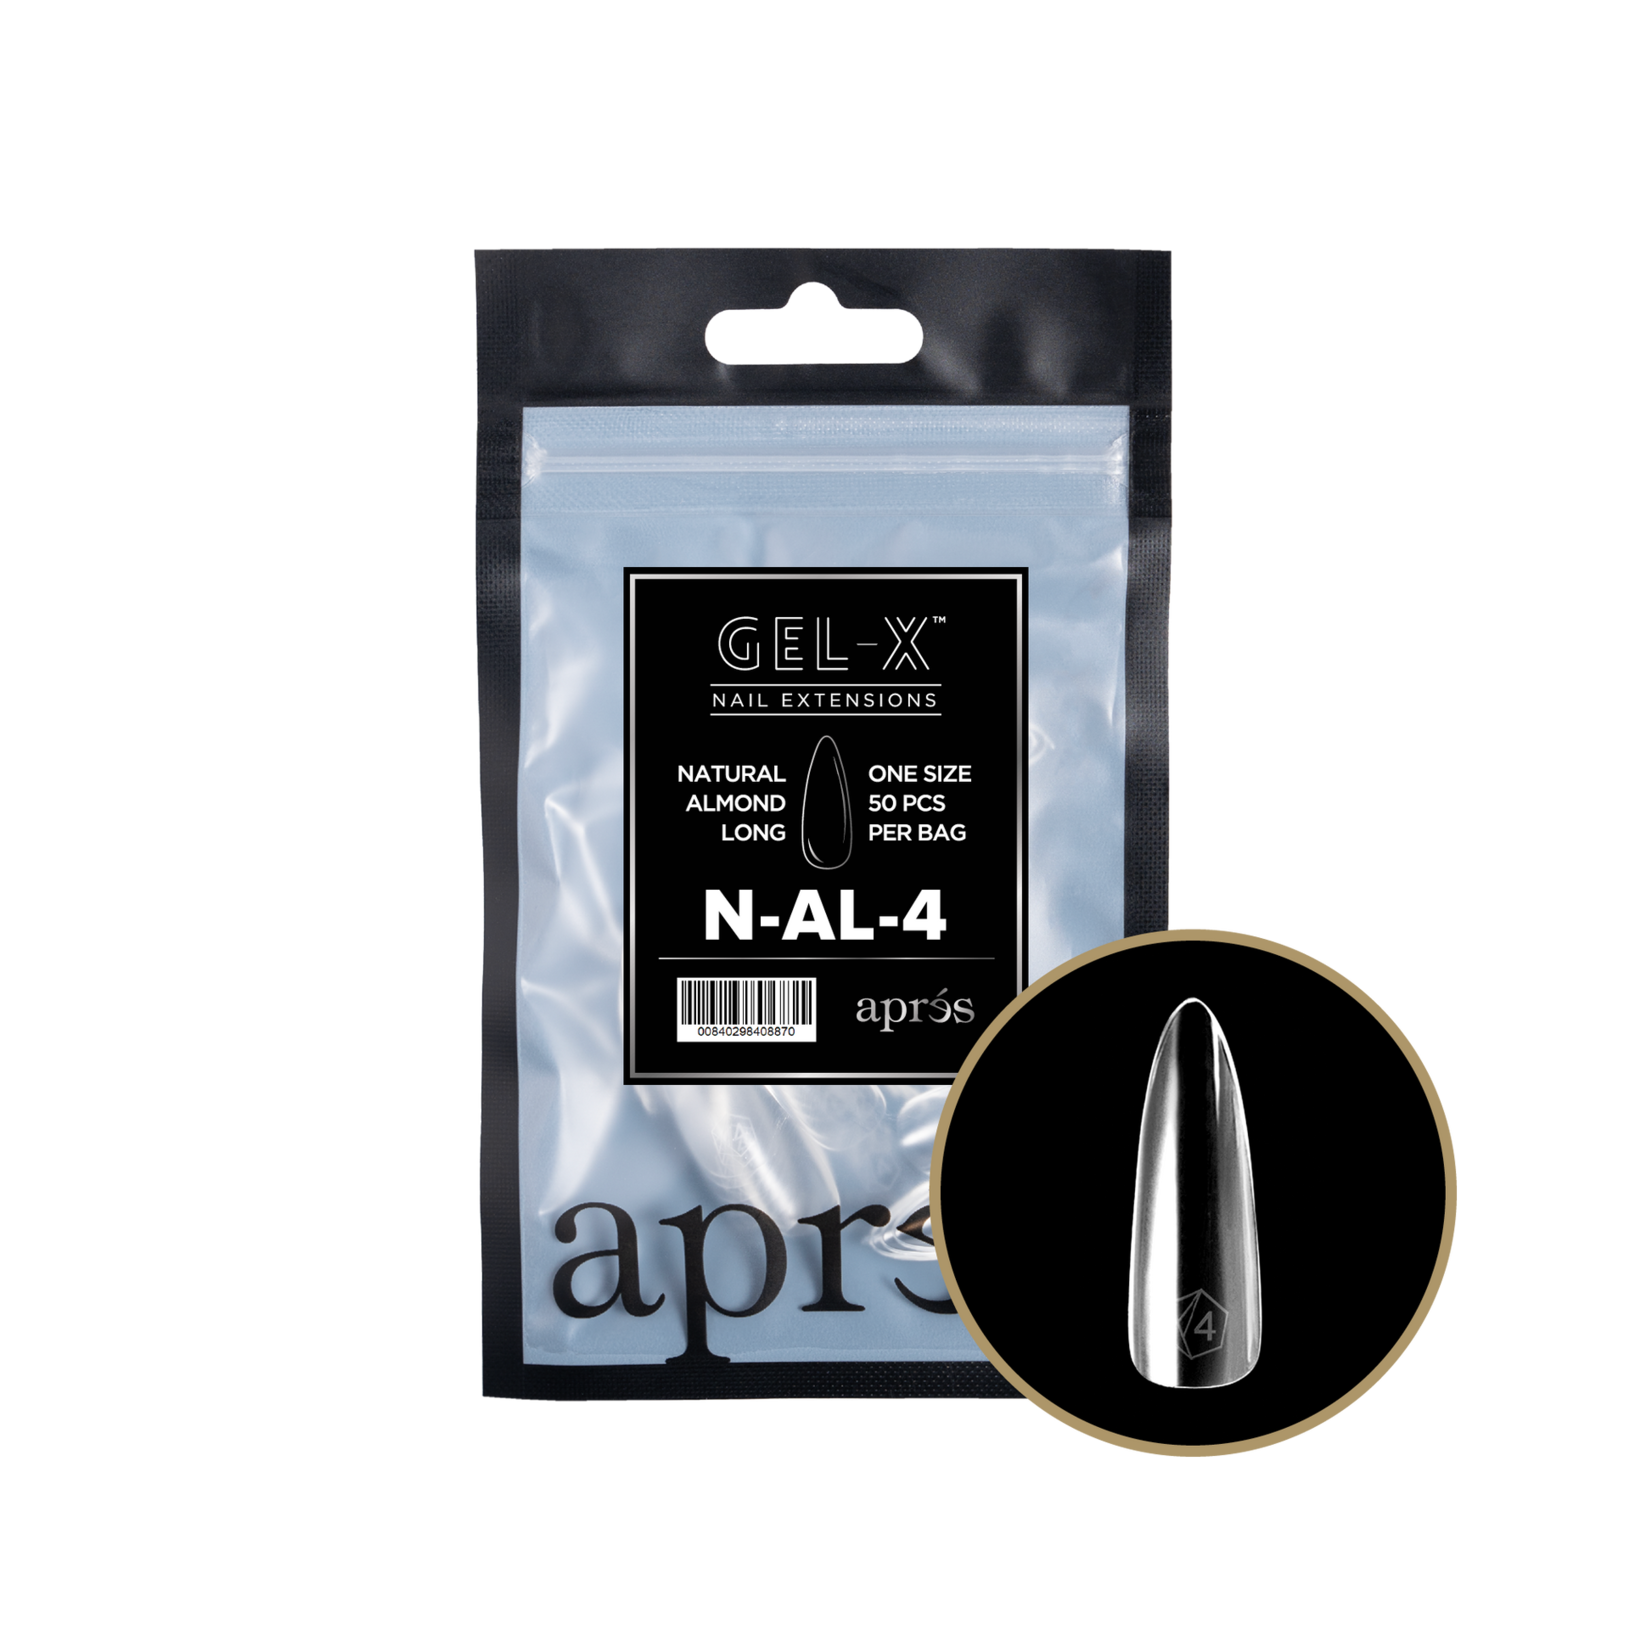 Apres Apres - Refill Bags - Natural - Almond Long - #4